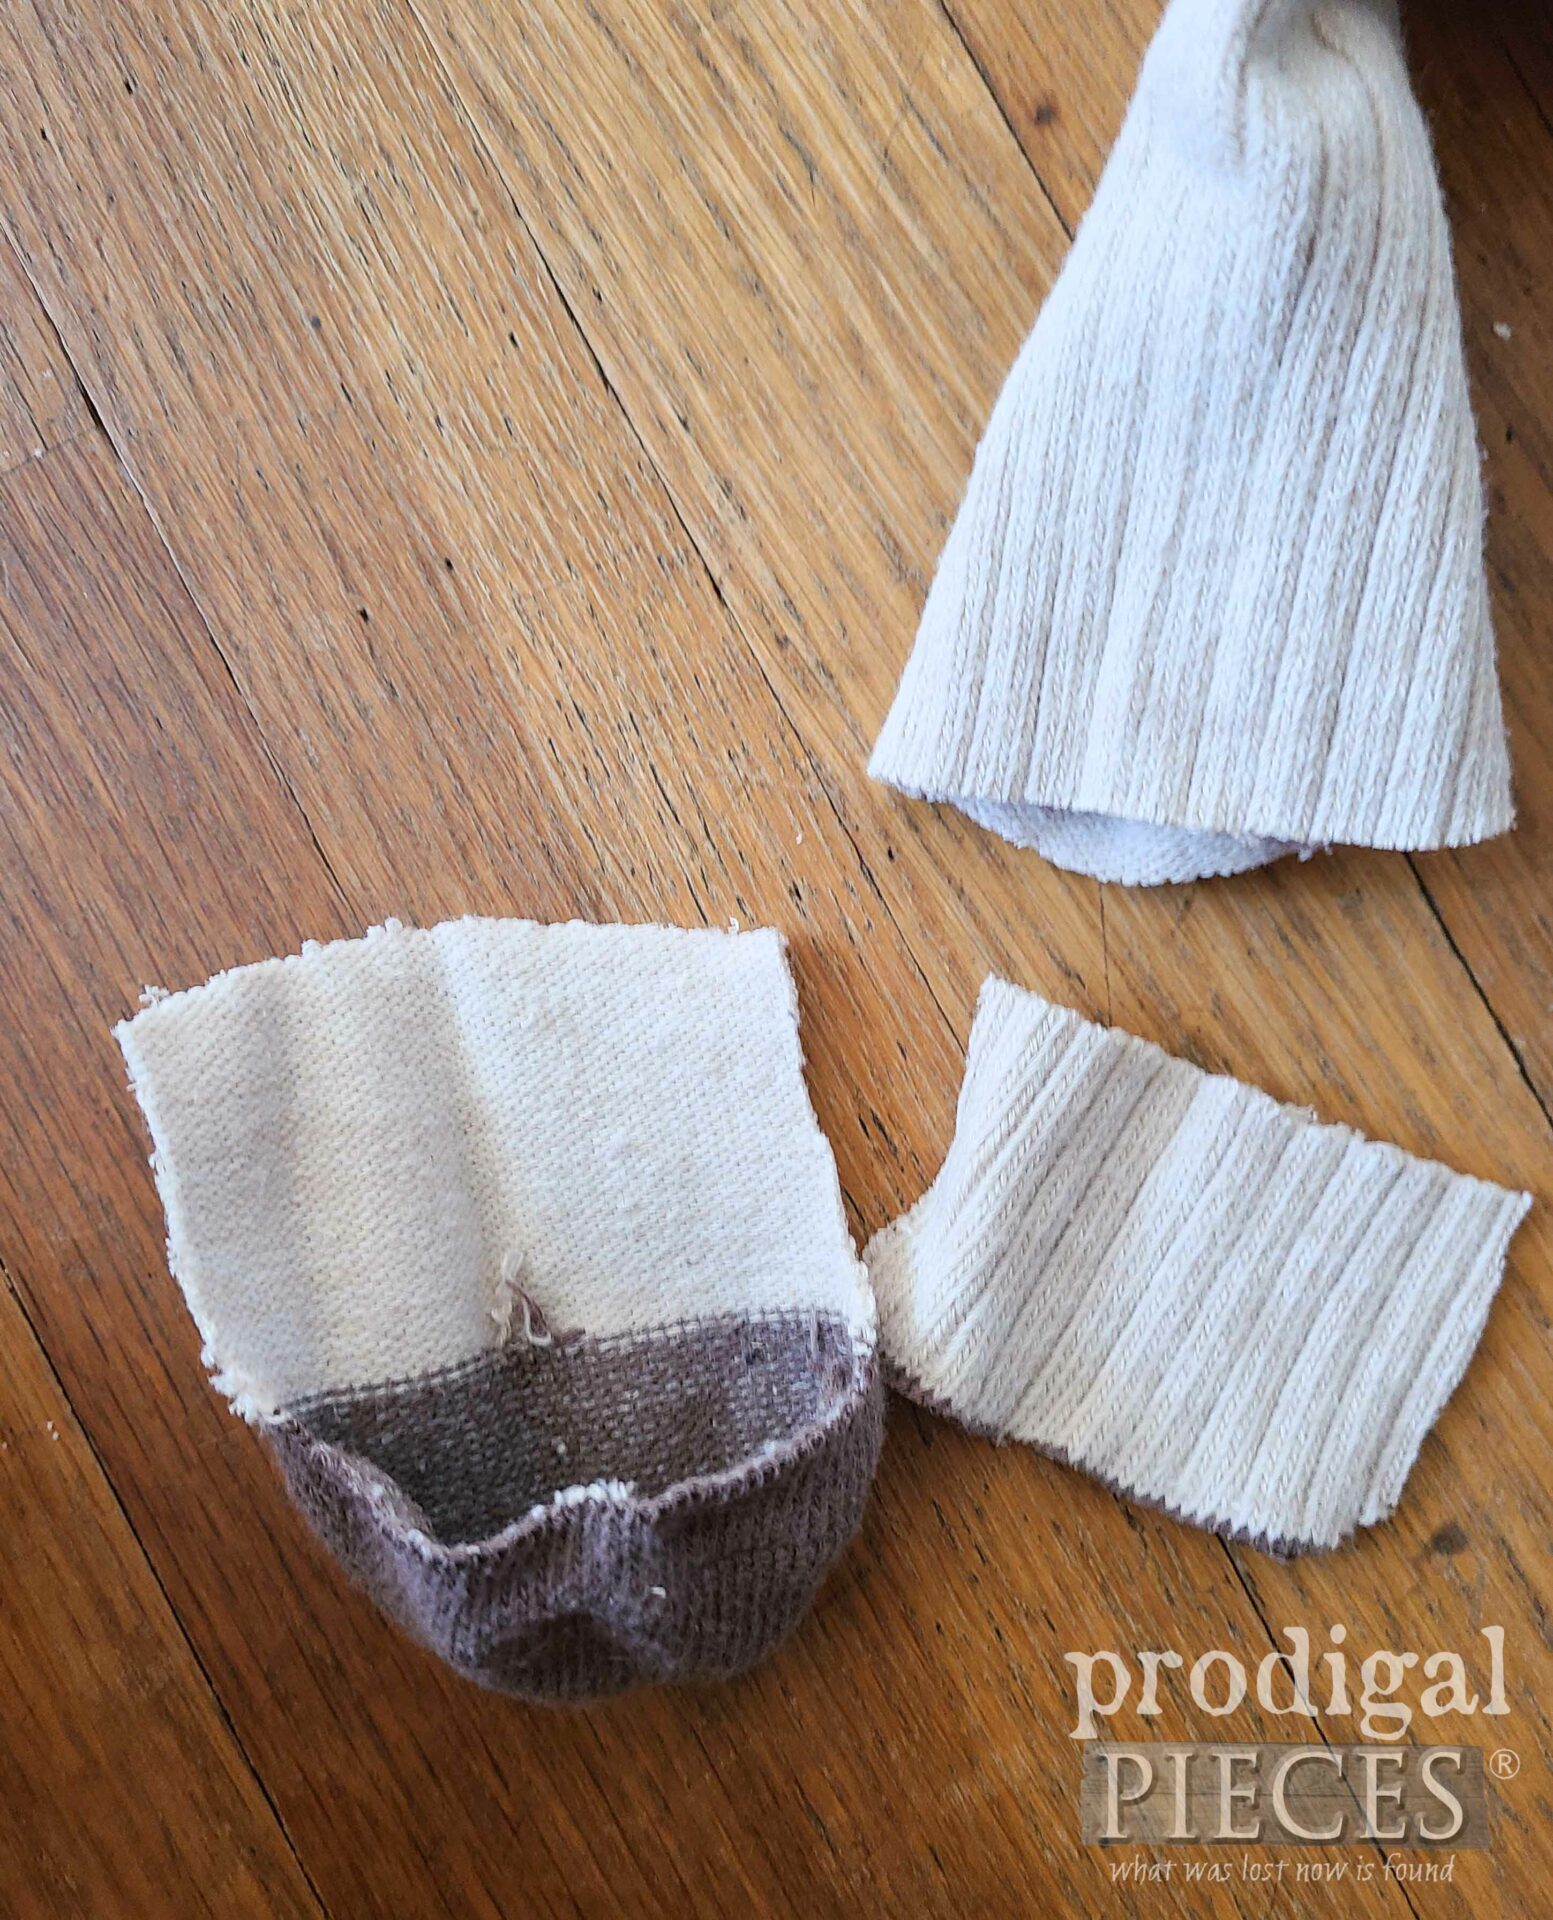 Cut Sock Toe for Sheep Head | prodigalpieces.com #prodigalpieces